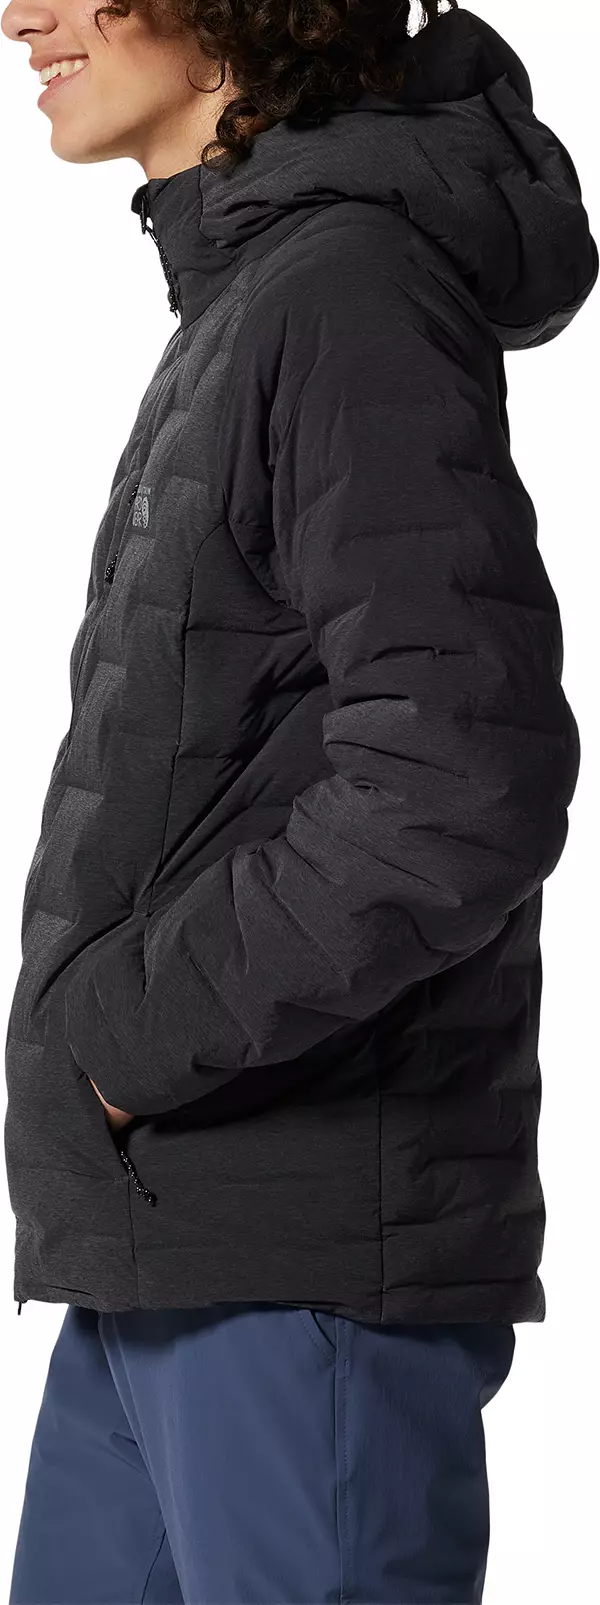 Mountain Hardwear Men's Stretchdown Jacket